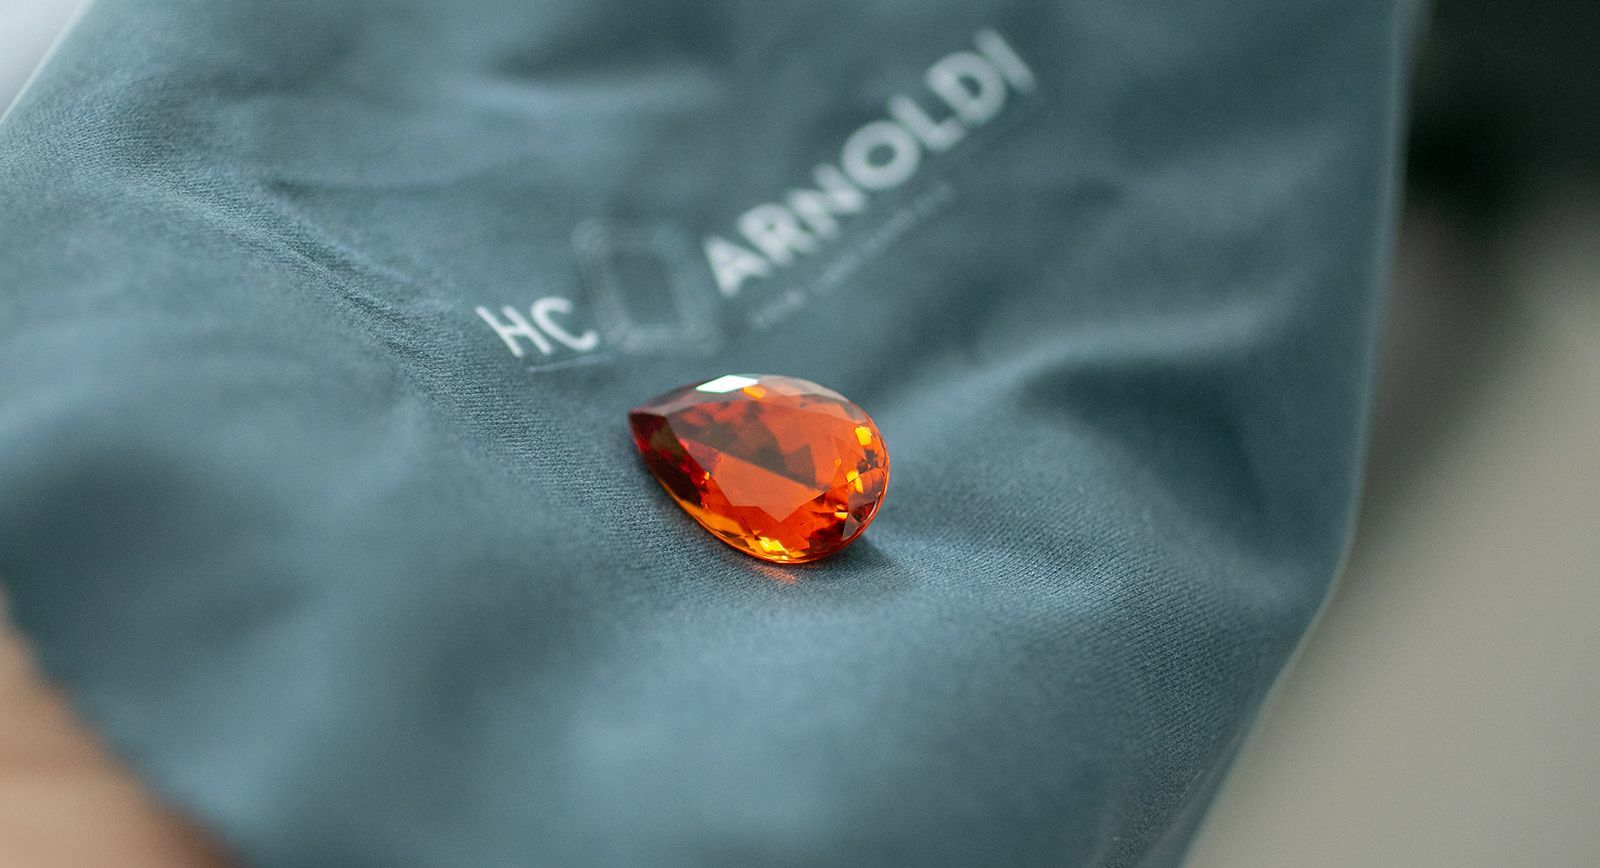 22.59 carat pear-shaped Mandarin garnet by Idar-Oberstein gem-cutting business HC Arnoldi 